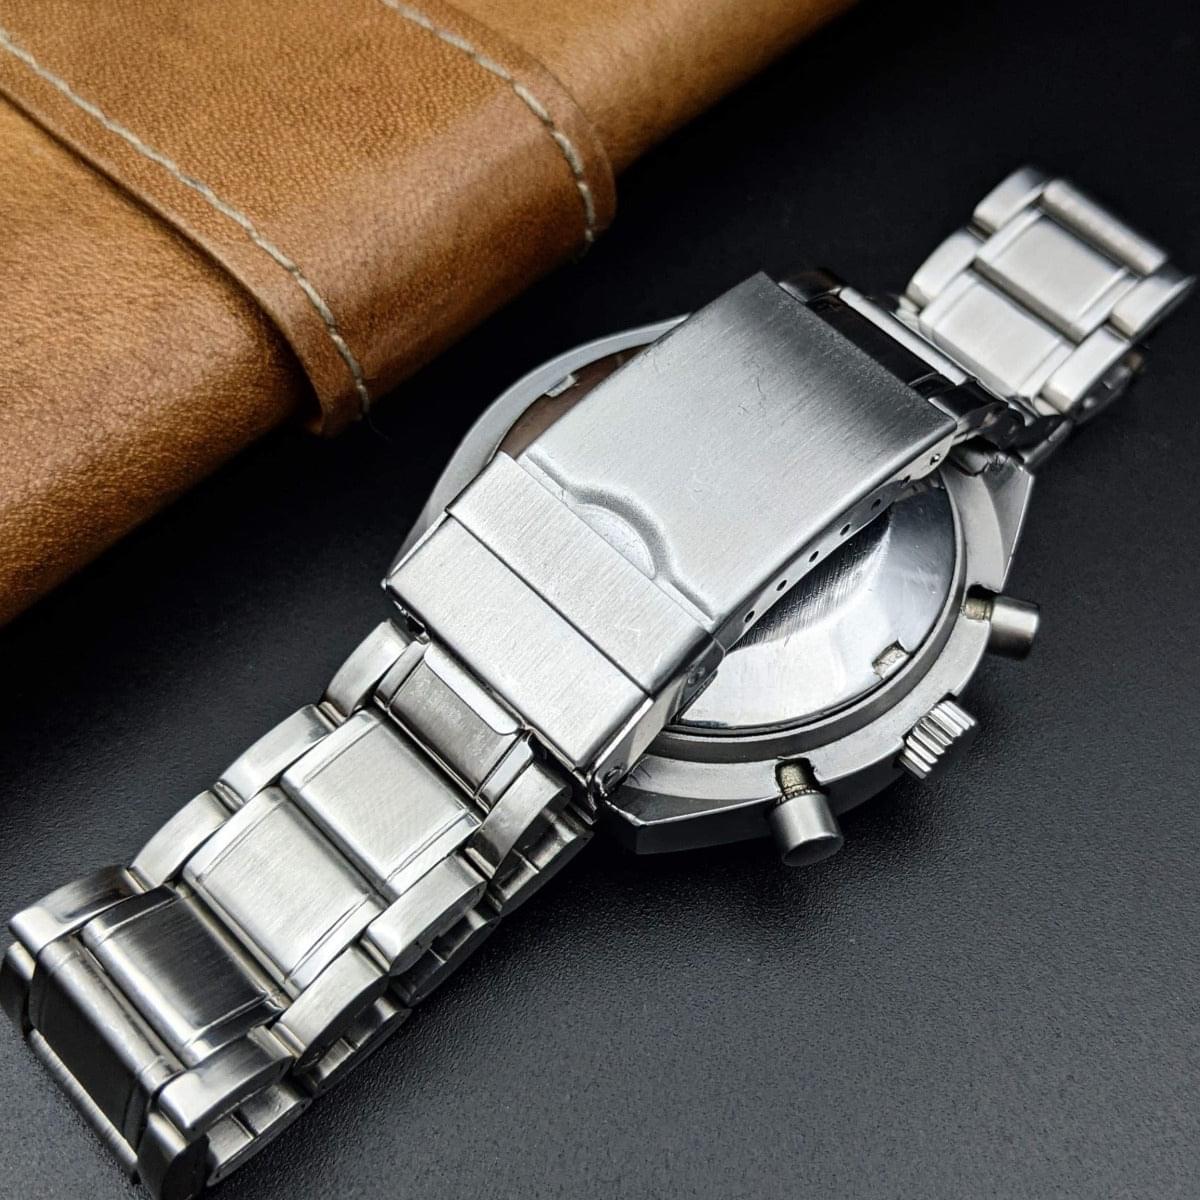 Dugena Monza Racing Chronograph Vintage Watch - Calibre 7765